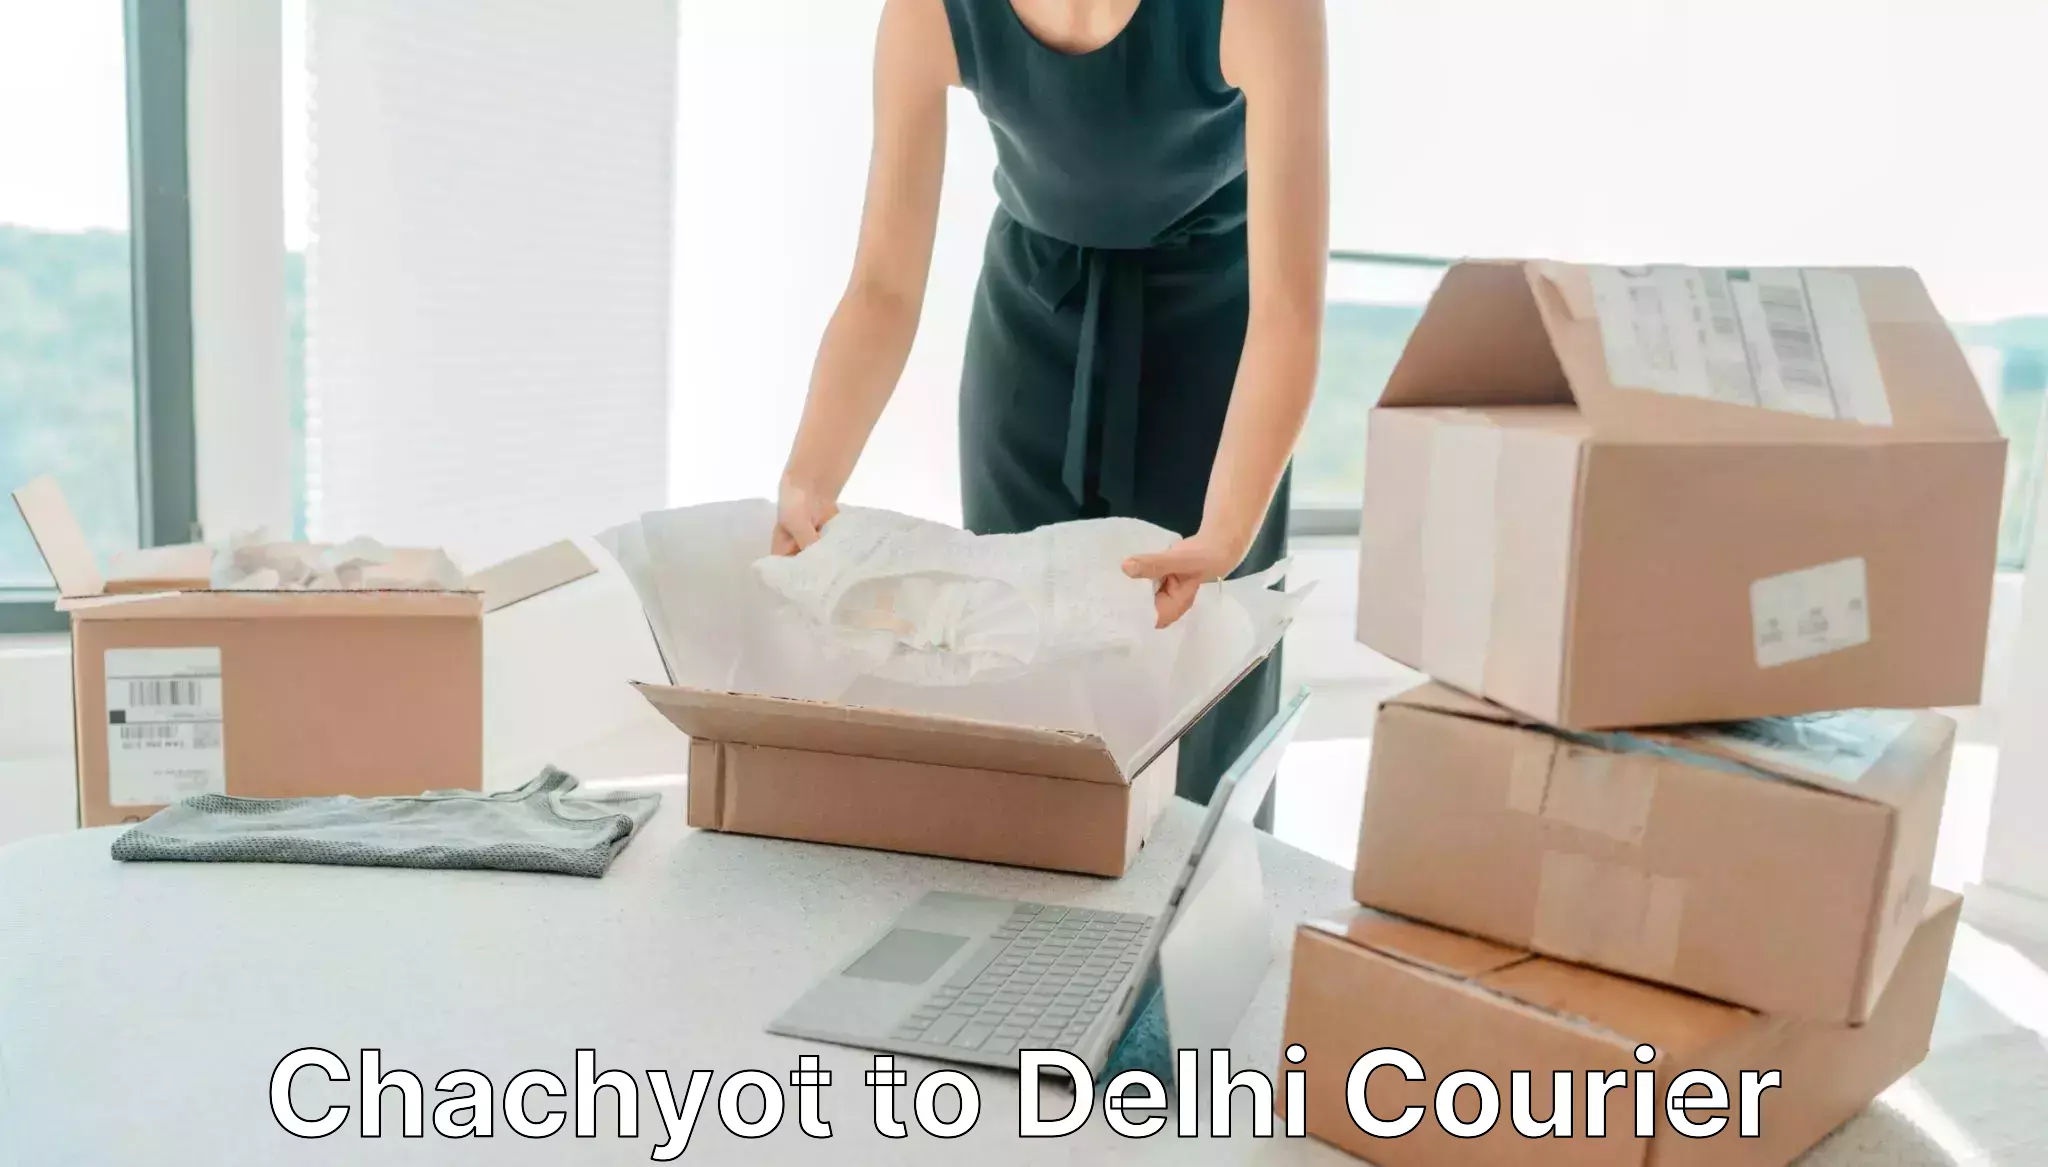 Express logistics providers Chachyot to Delhi